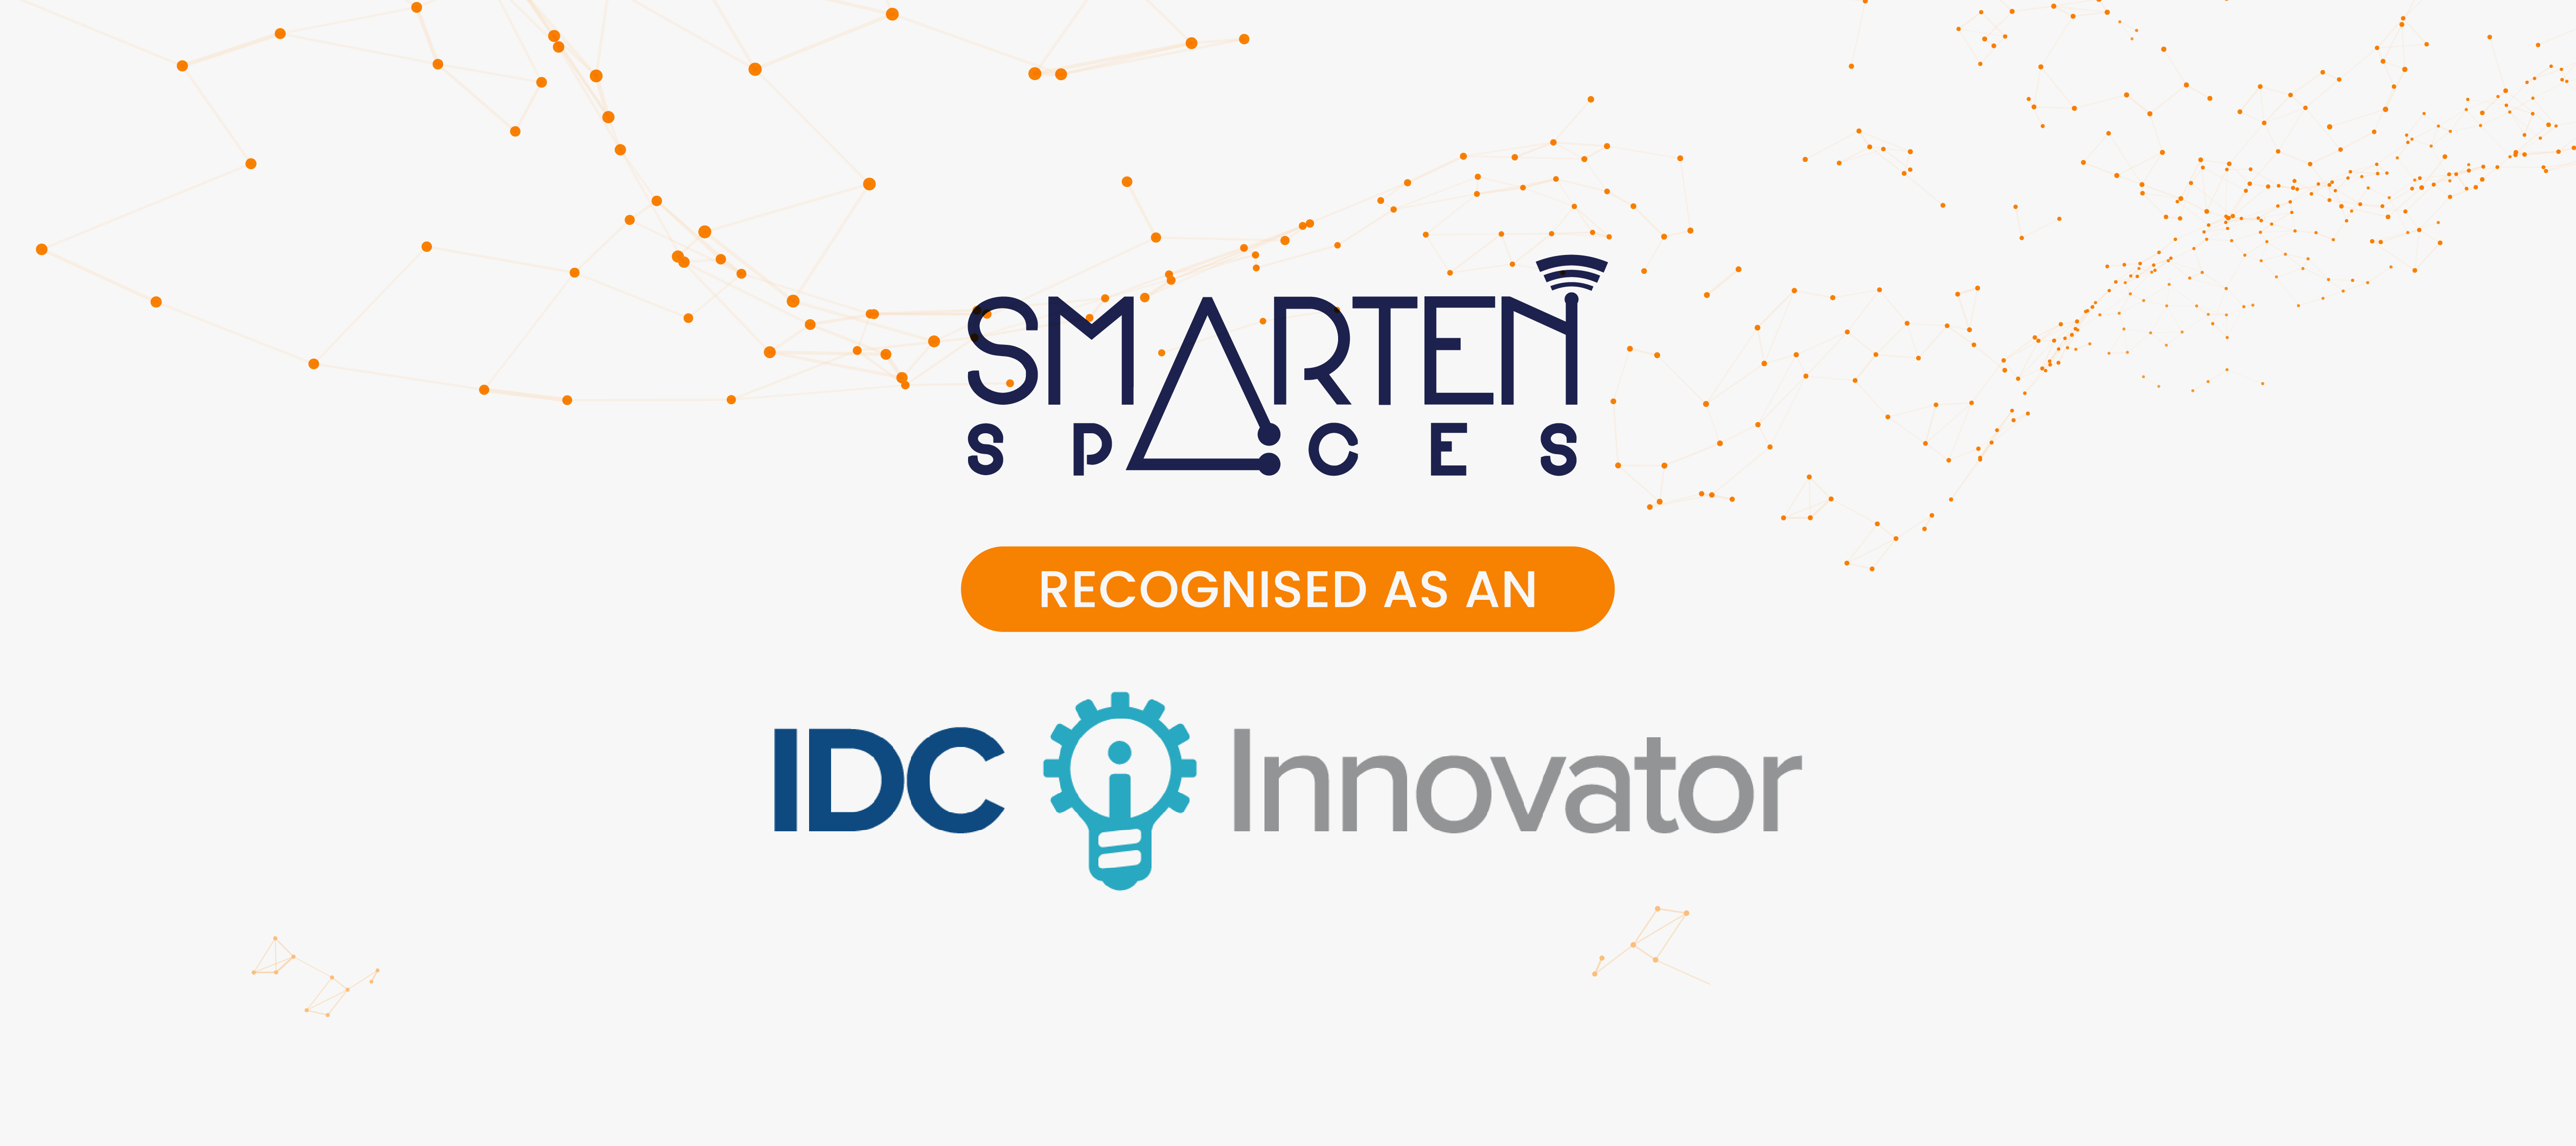 [REPORT] Smarten Spaces named an IDC Innovator for Mobile Enterprise Asset Management, 2021